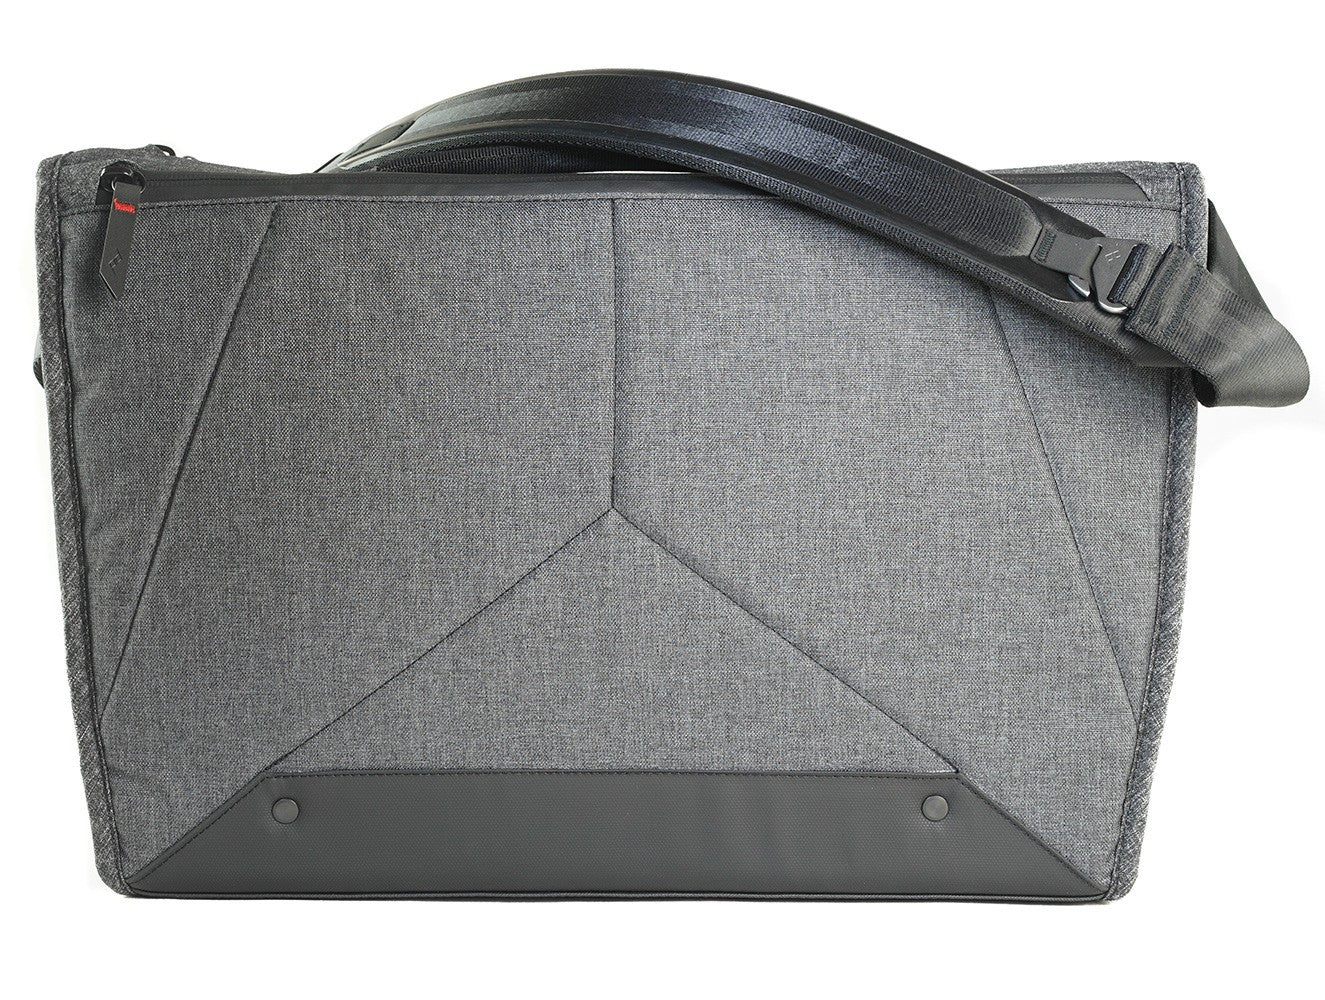 Peak Design The Everyday Messenger 13” – Charcoal, bags shoulder bags, Peak Design - Pictureline  - 2